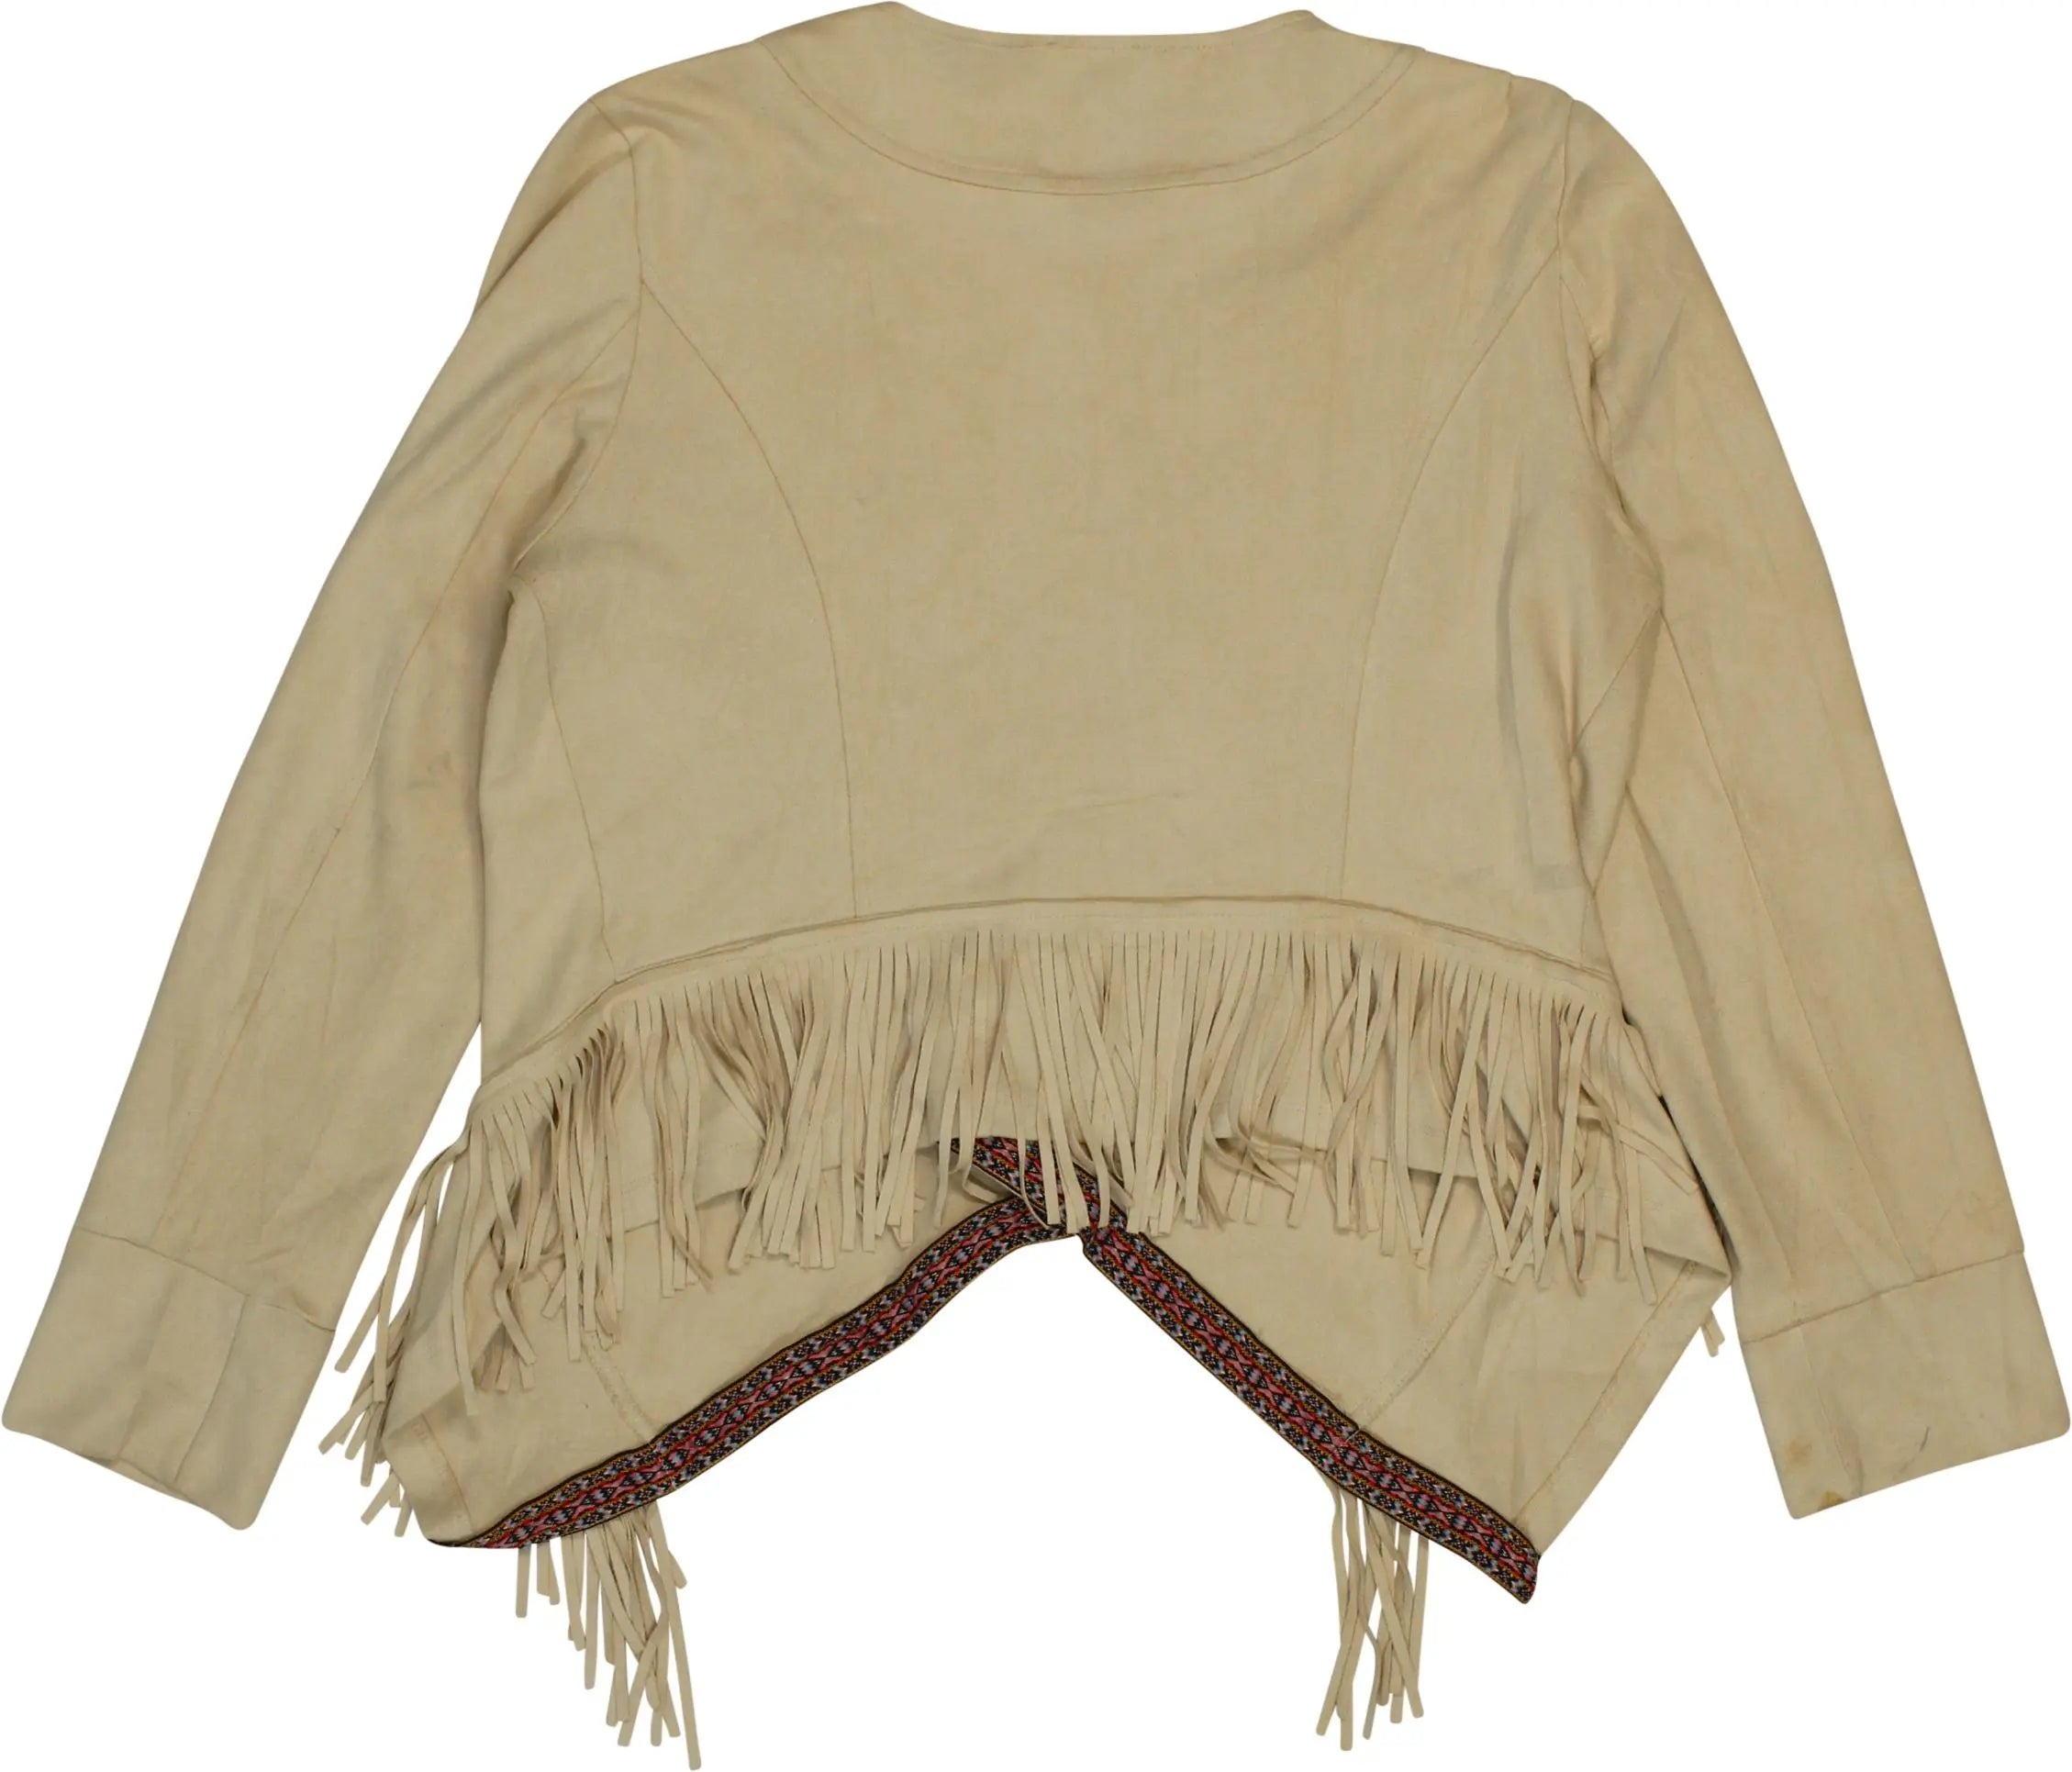 Ambika - Fringe Jacket- ThriftTale.com - Vintage and second handclothing